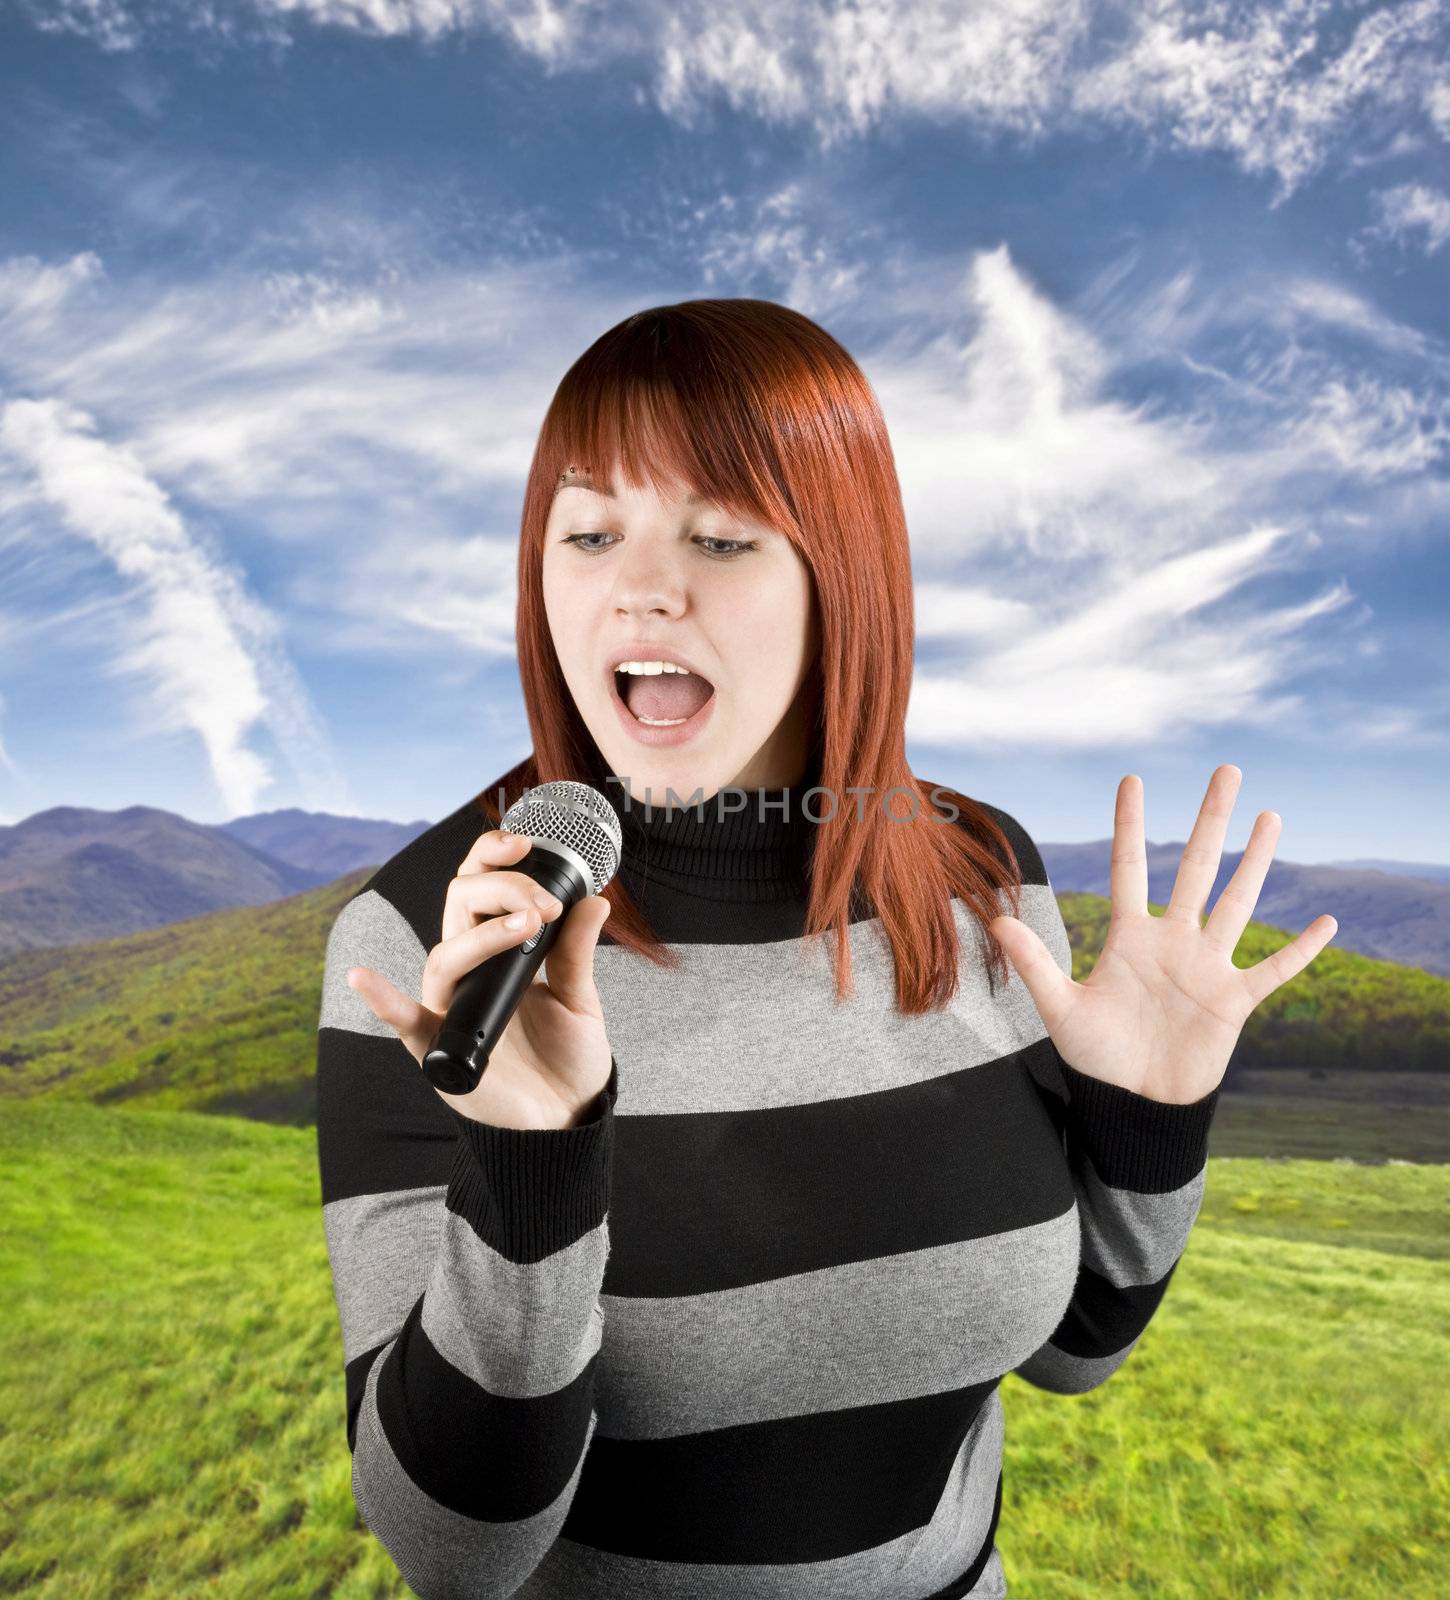 Redhead girl singing karaoke on microphone by domencolja